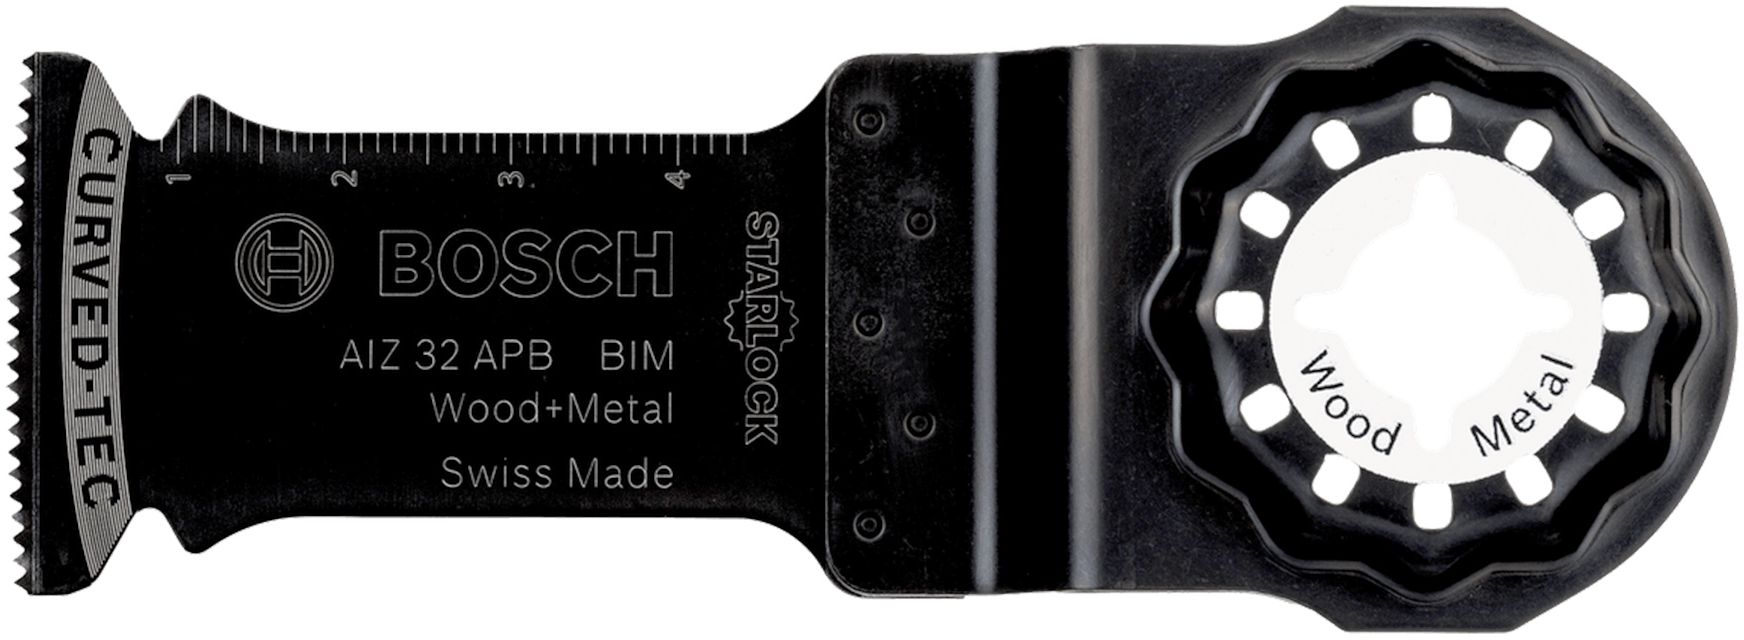 Tauchsägeblatt AIZ 32 APB Holz + Metall 32/40mm, BIM, Starlock, à 5 Stk., 2 608 661 629 - Bosch Maschinenzubehör